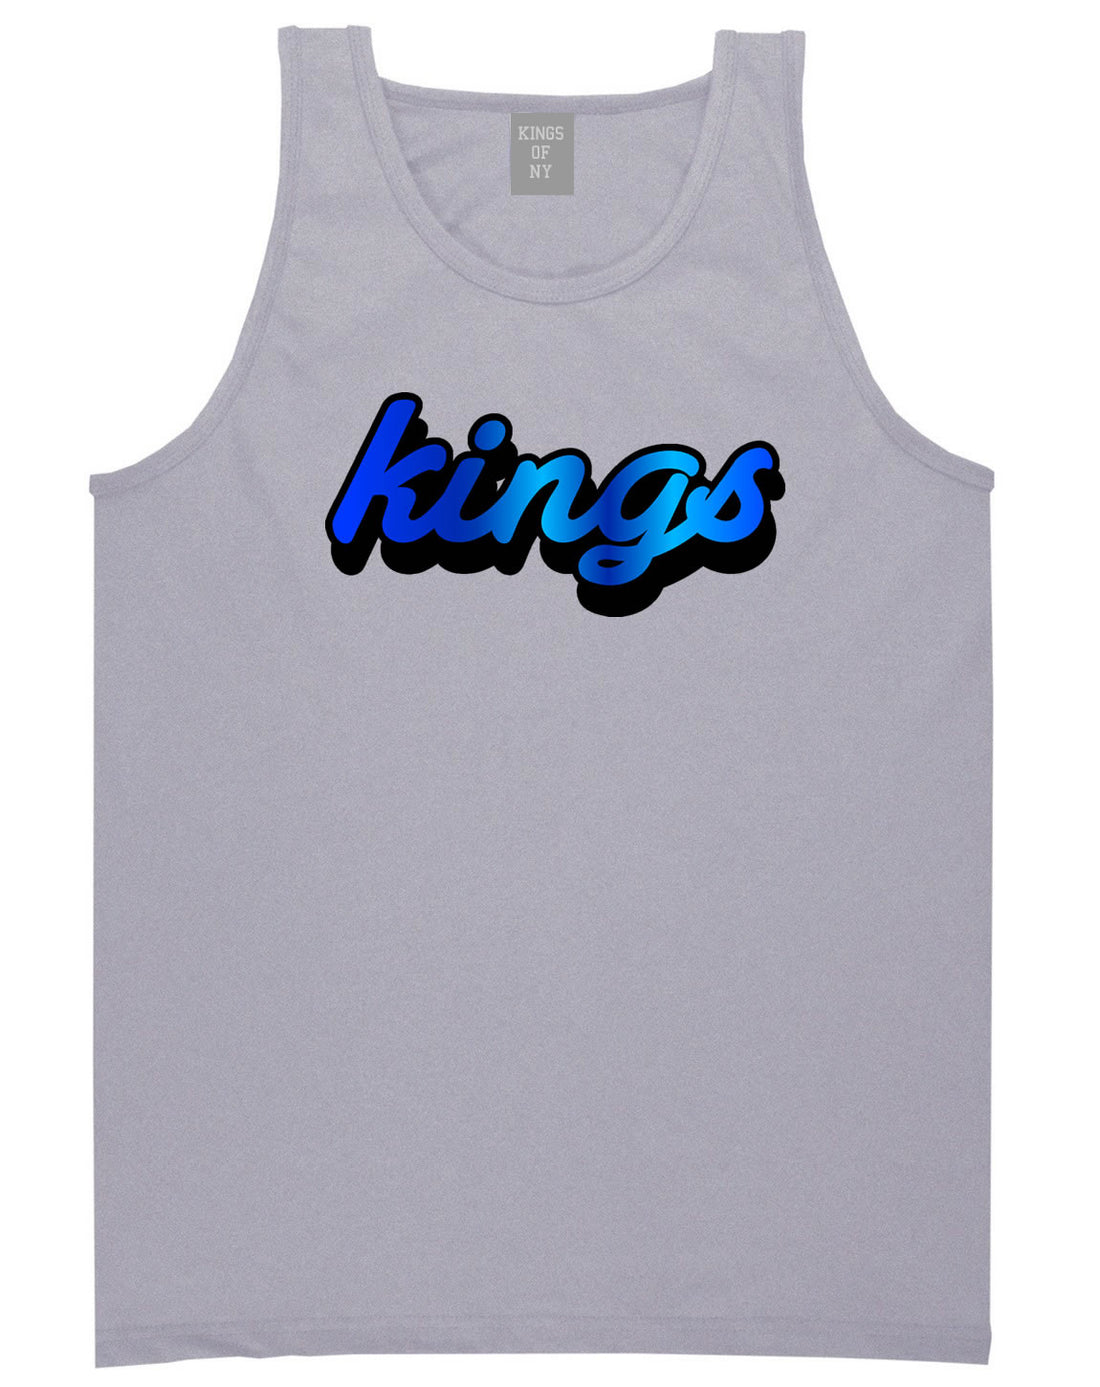 Kings Blue Gradient Logo Tank Top in Grey By Kings Of NY